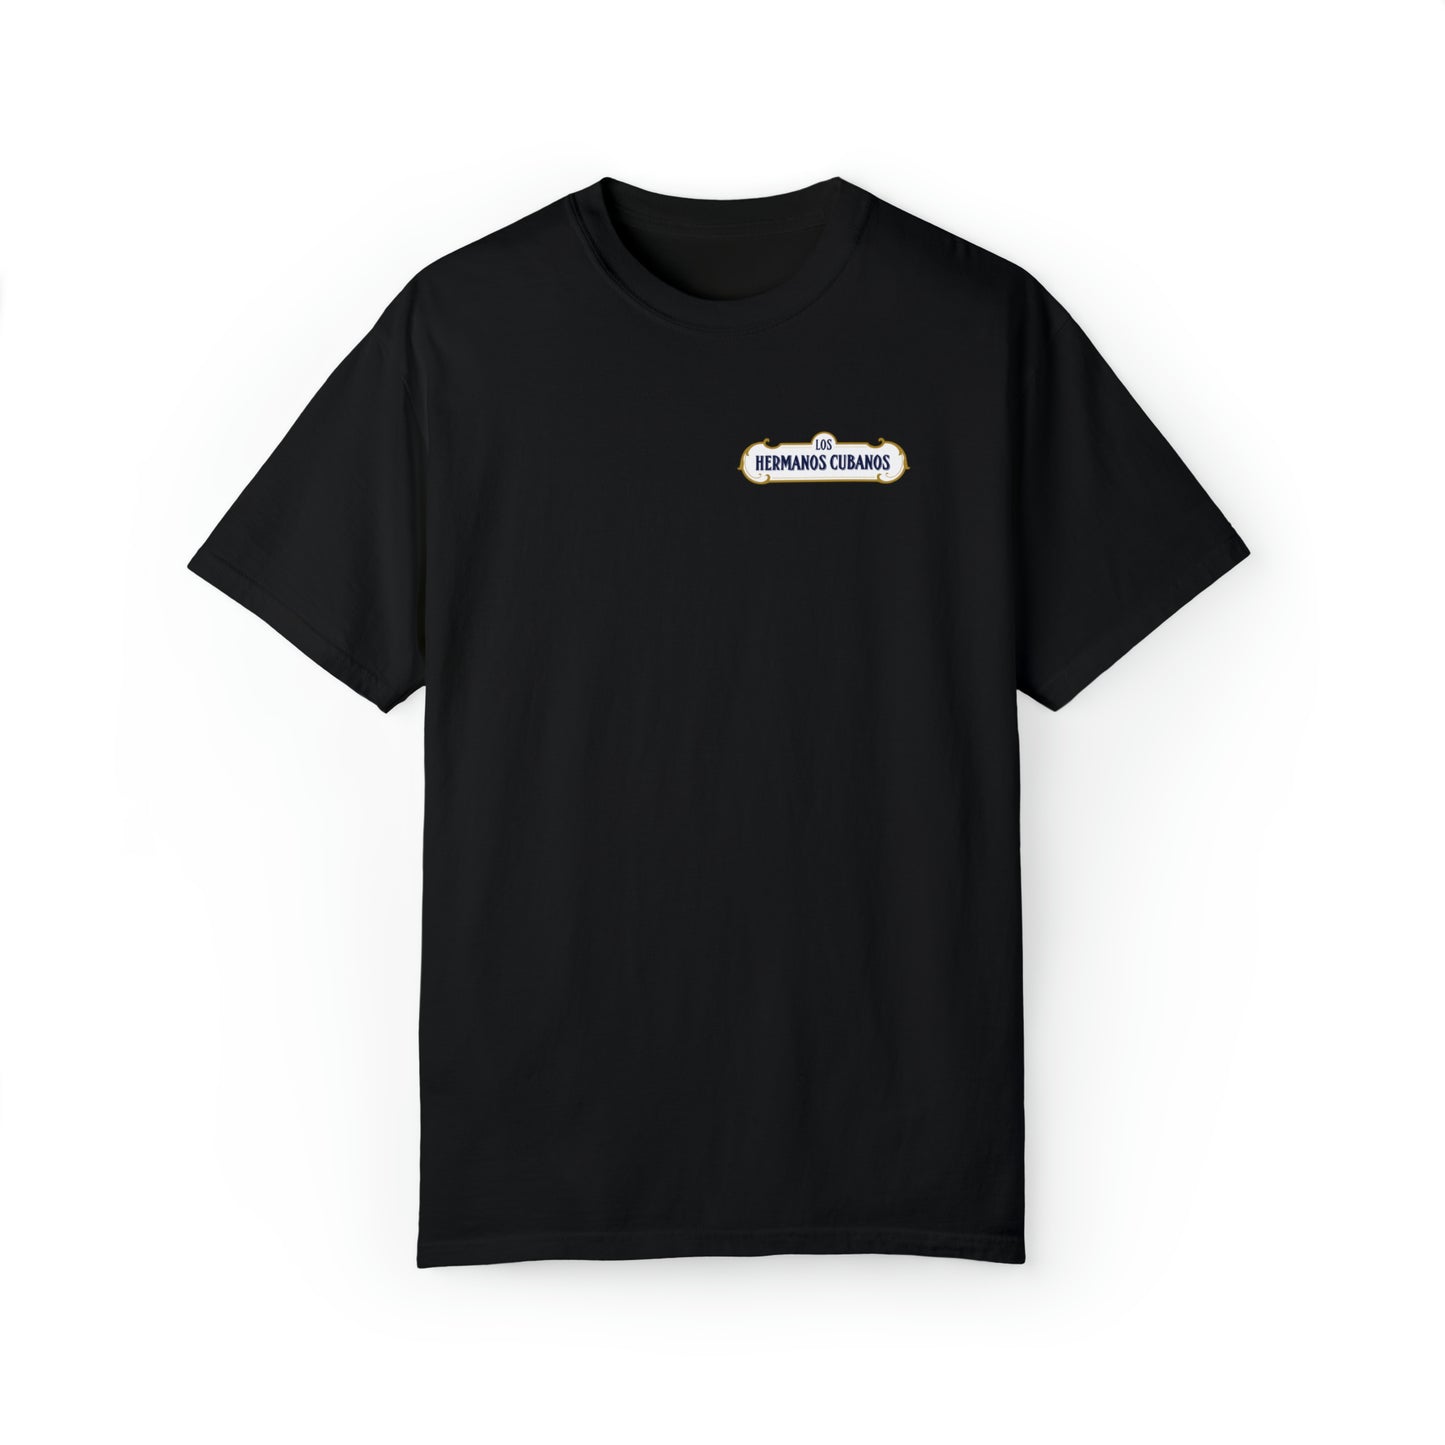 Los Hermanos Cubanos Premium Unisex Garment-Dyed T-shirt